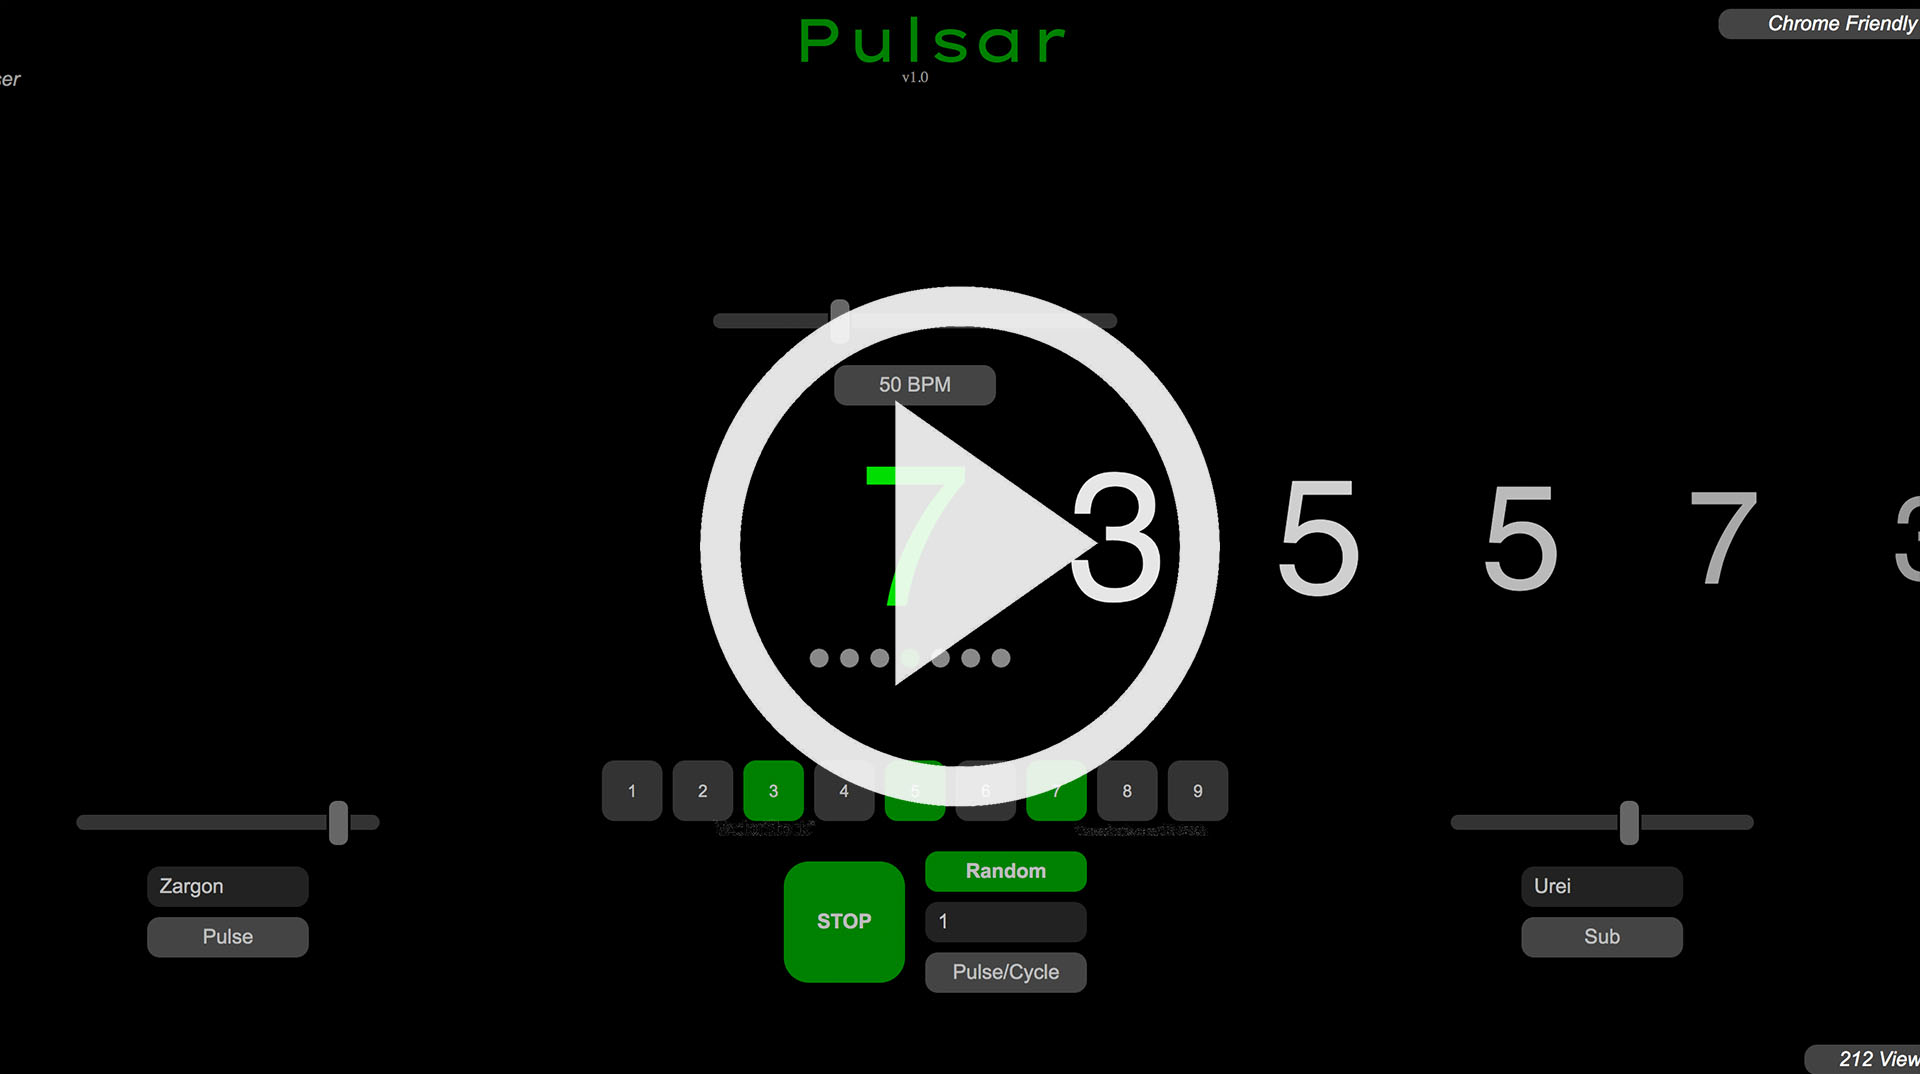 PULSAR: Online Metronome App for Metric 